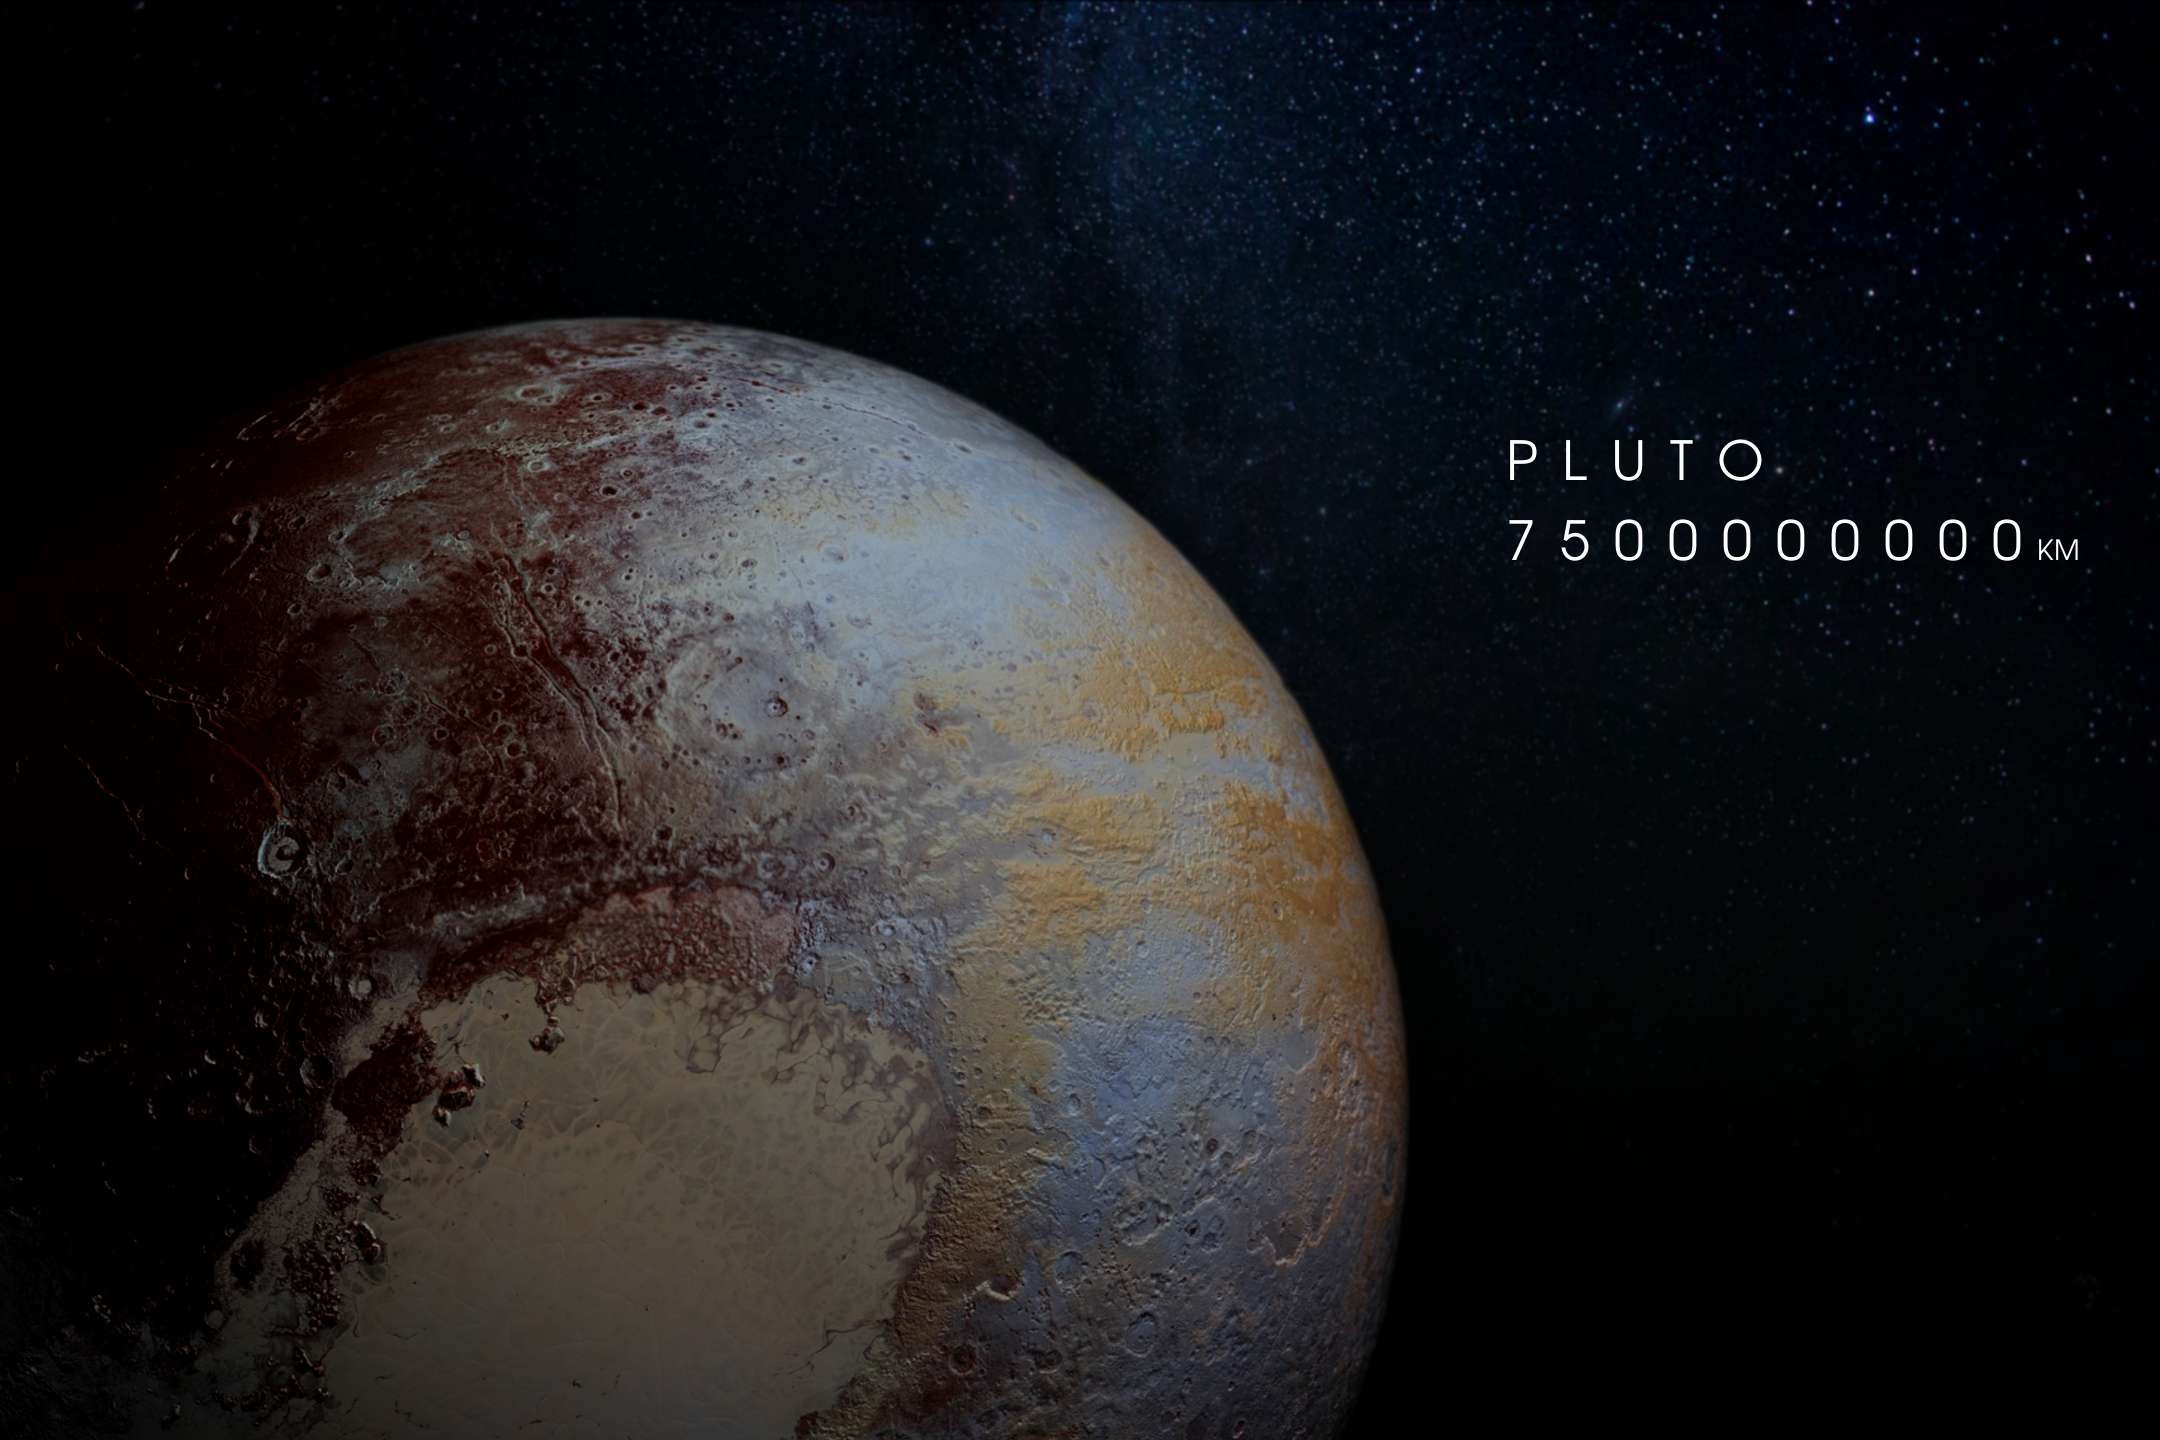 Pluto Wallpaper